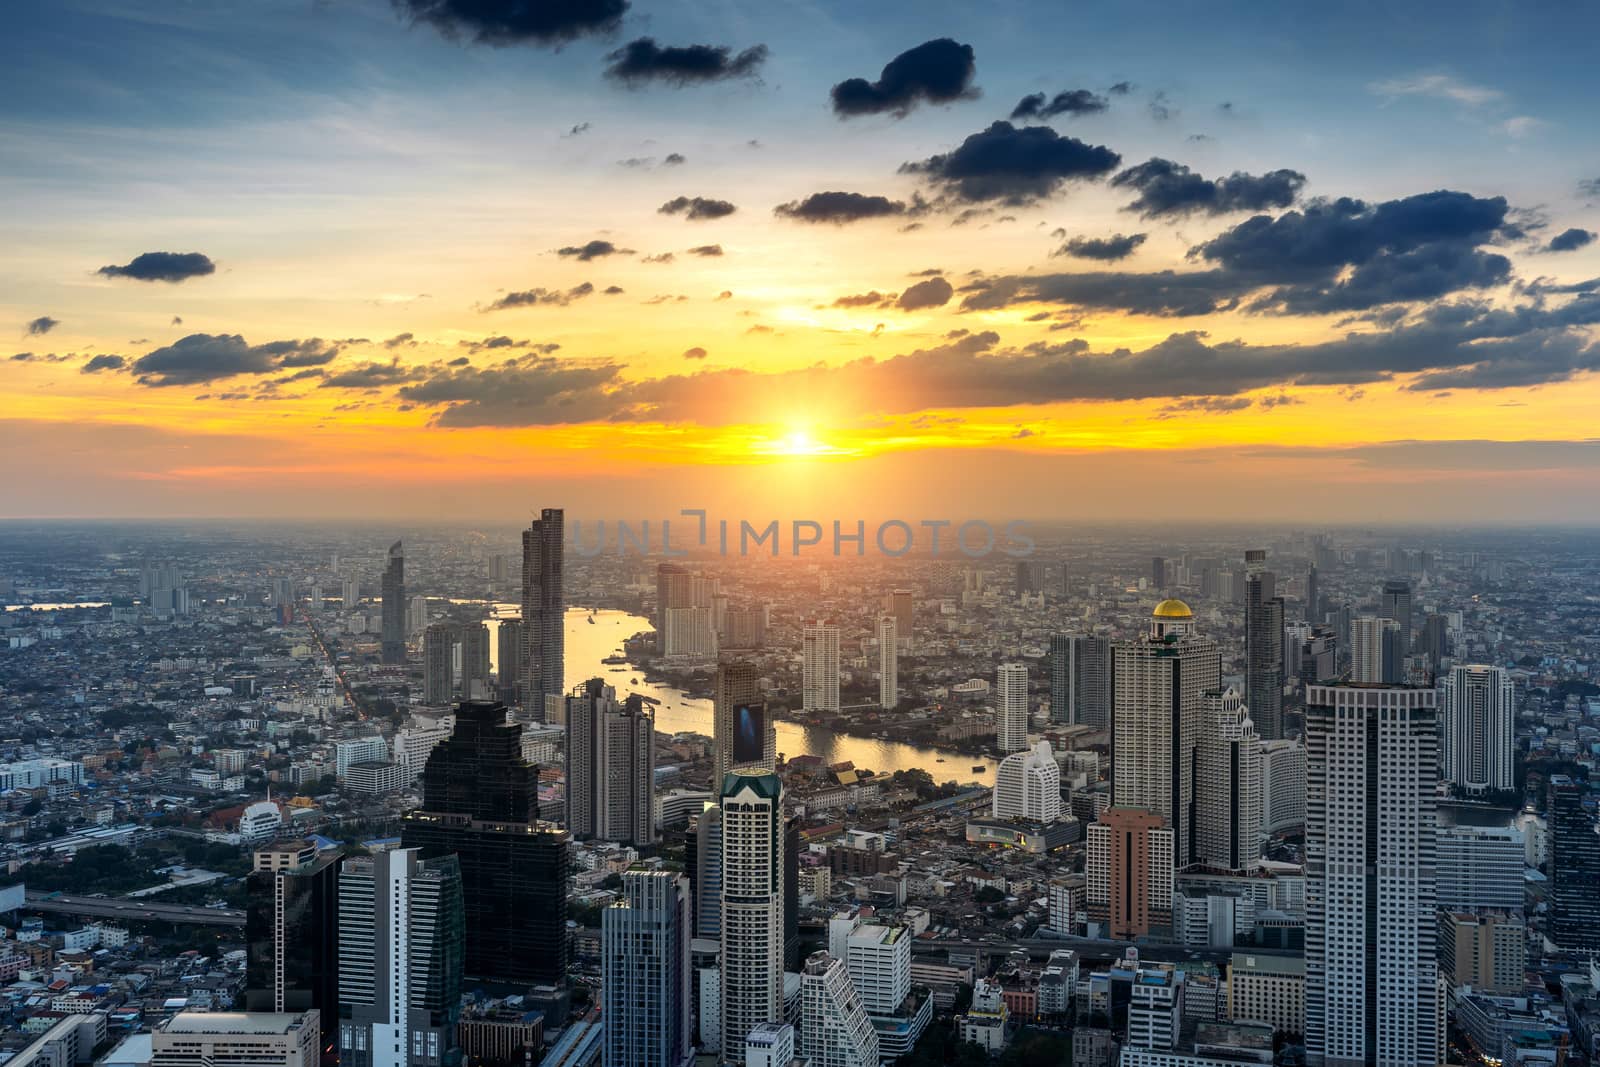 Beautiful sunset at Bangkok, Thailand by gutarphotoghaphy